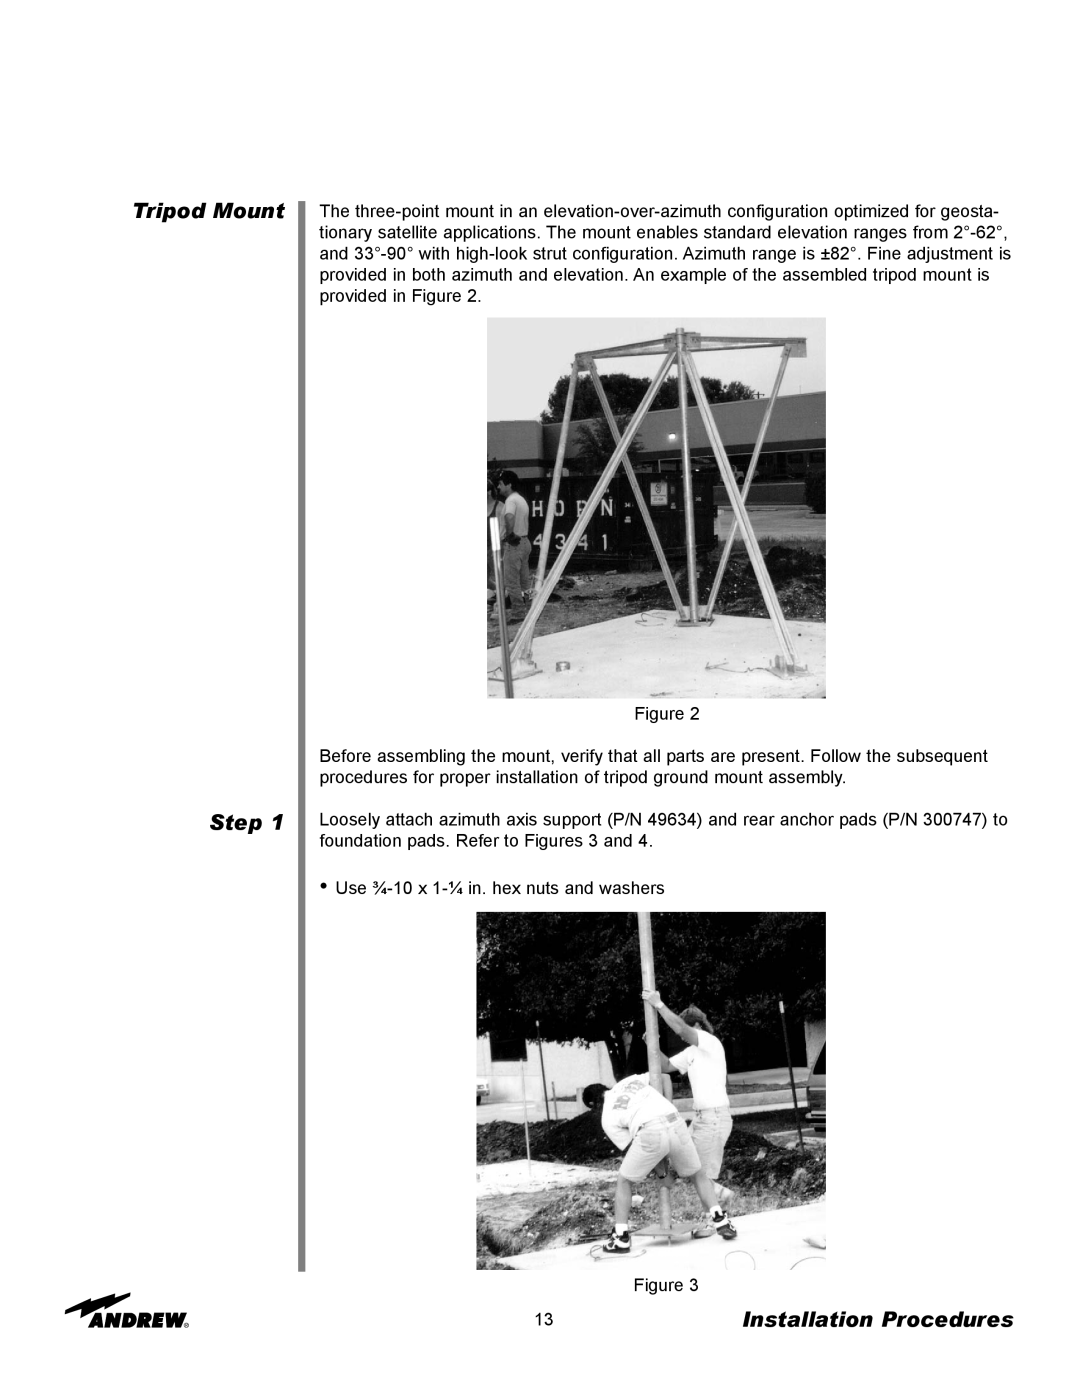 Andrew ES45T manual Tripod Mount Step, Installation Procedures 